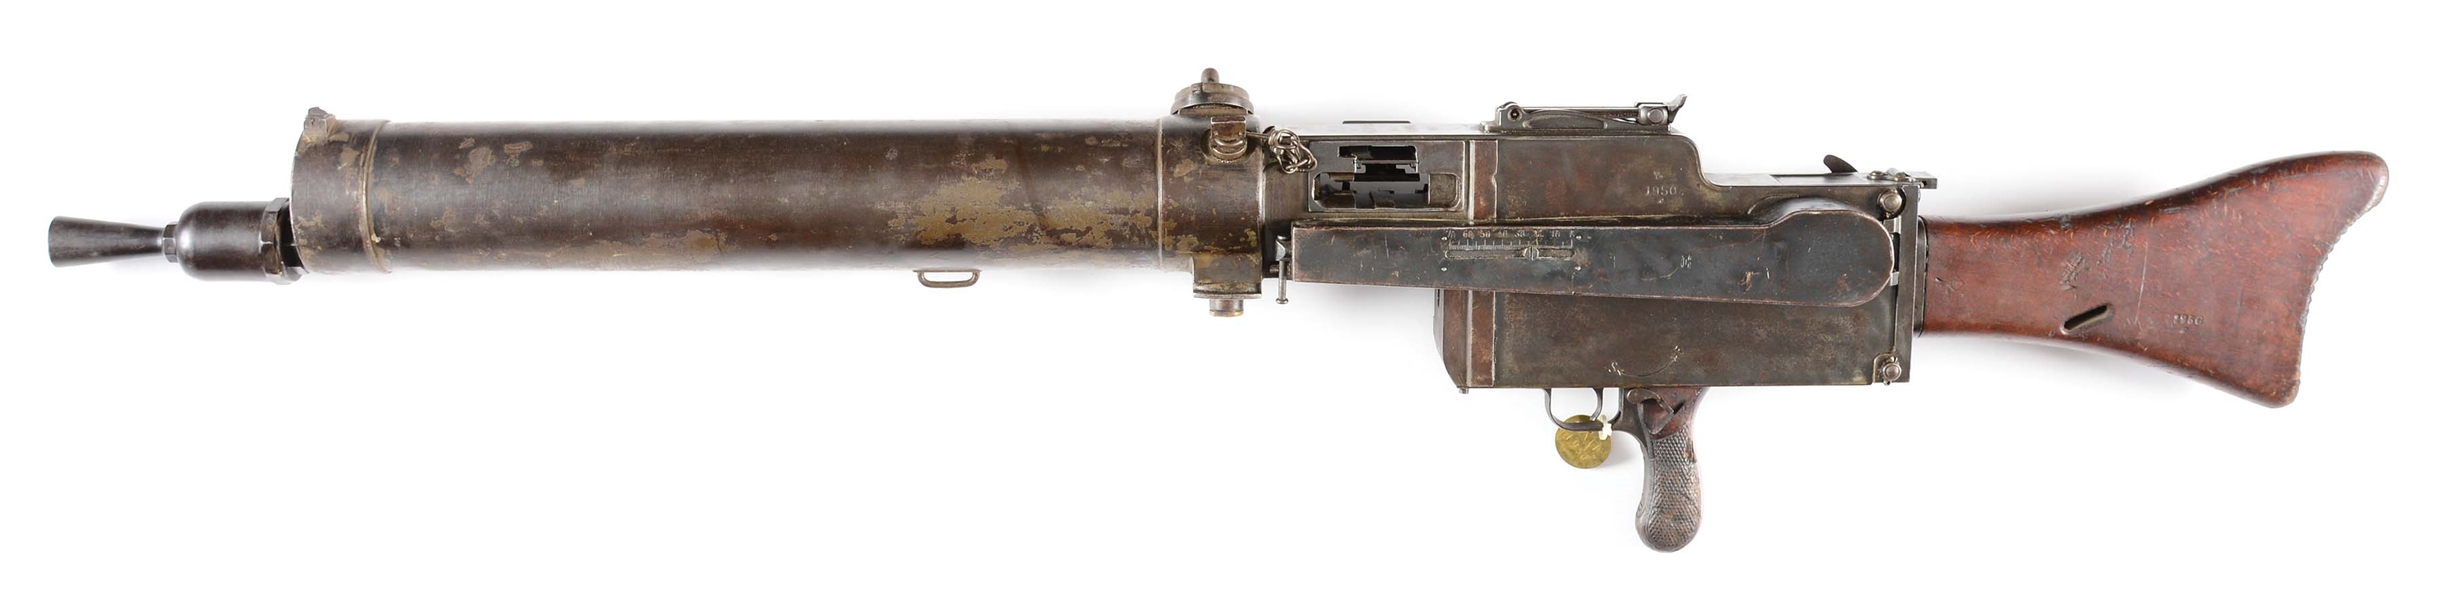 (N) VERY FINE ORIGINAL GERMAN WORLD WAR I MG 08/15 MAXIM MACHINE GUN (CURIO AND RELIC).